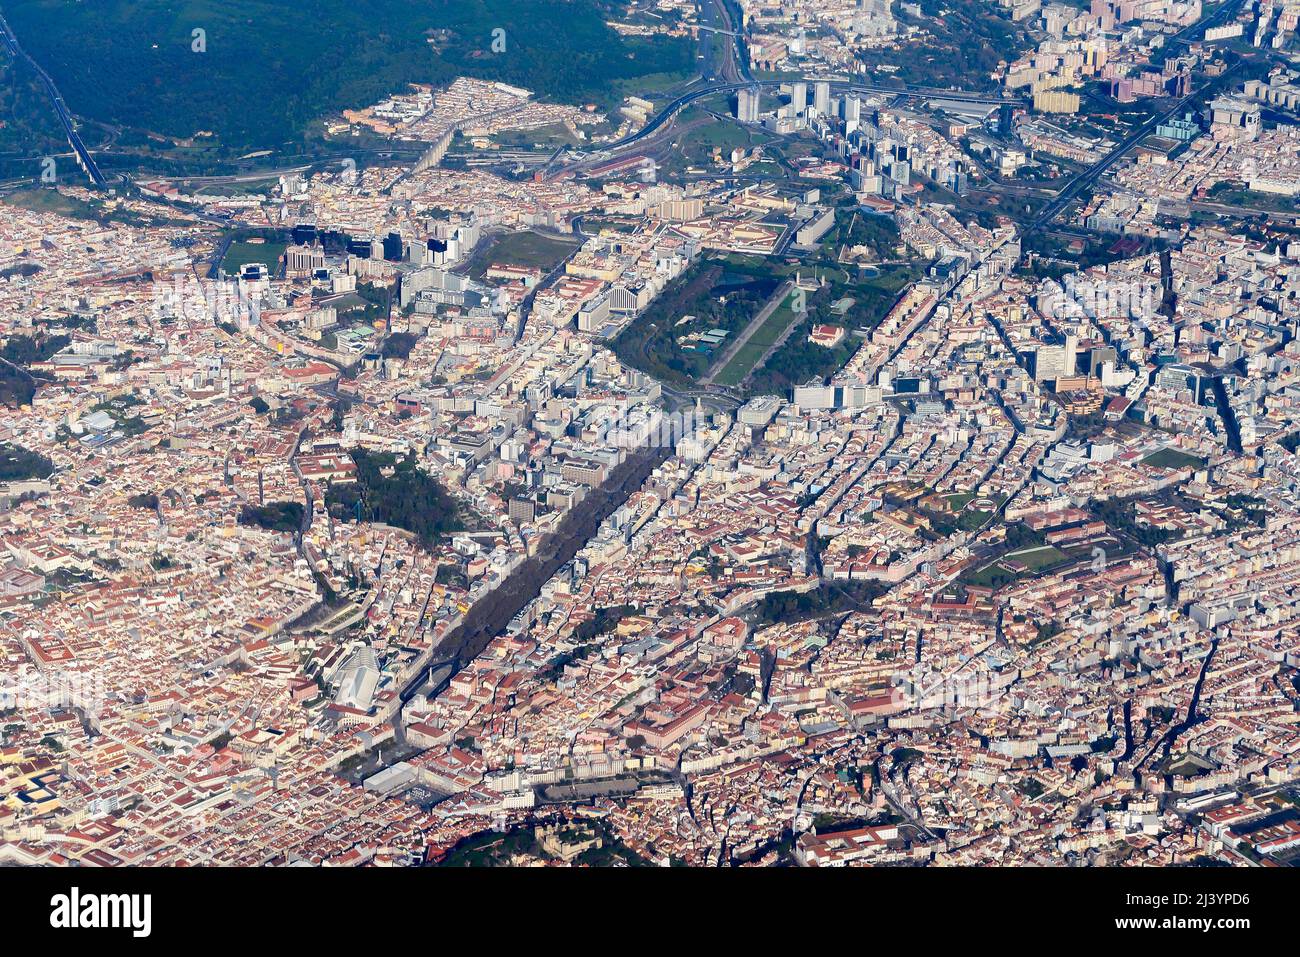 Lisbon aerial view showing Av. da Liberdade Boulevard, Marques do Pombal Square and Eduardo VII Park. Portugal capital city Lisbon seen from above. Stock Photo